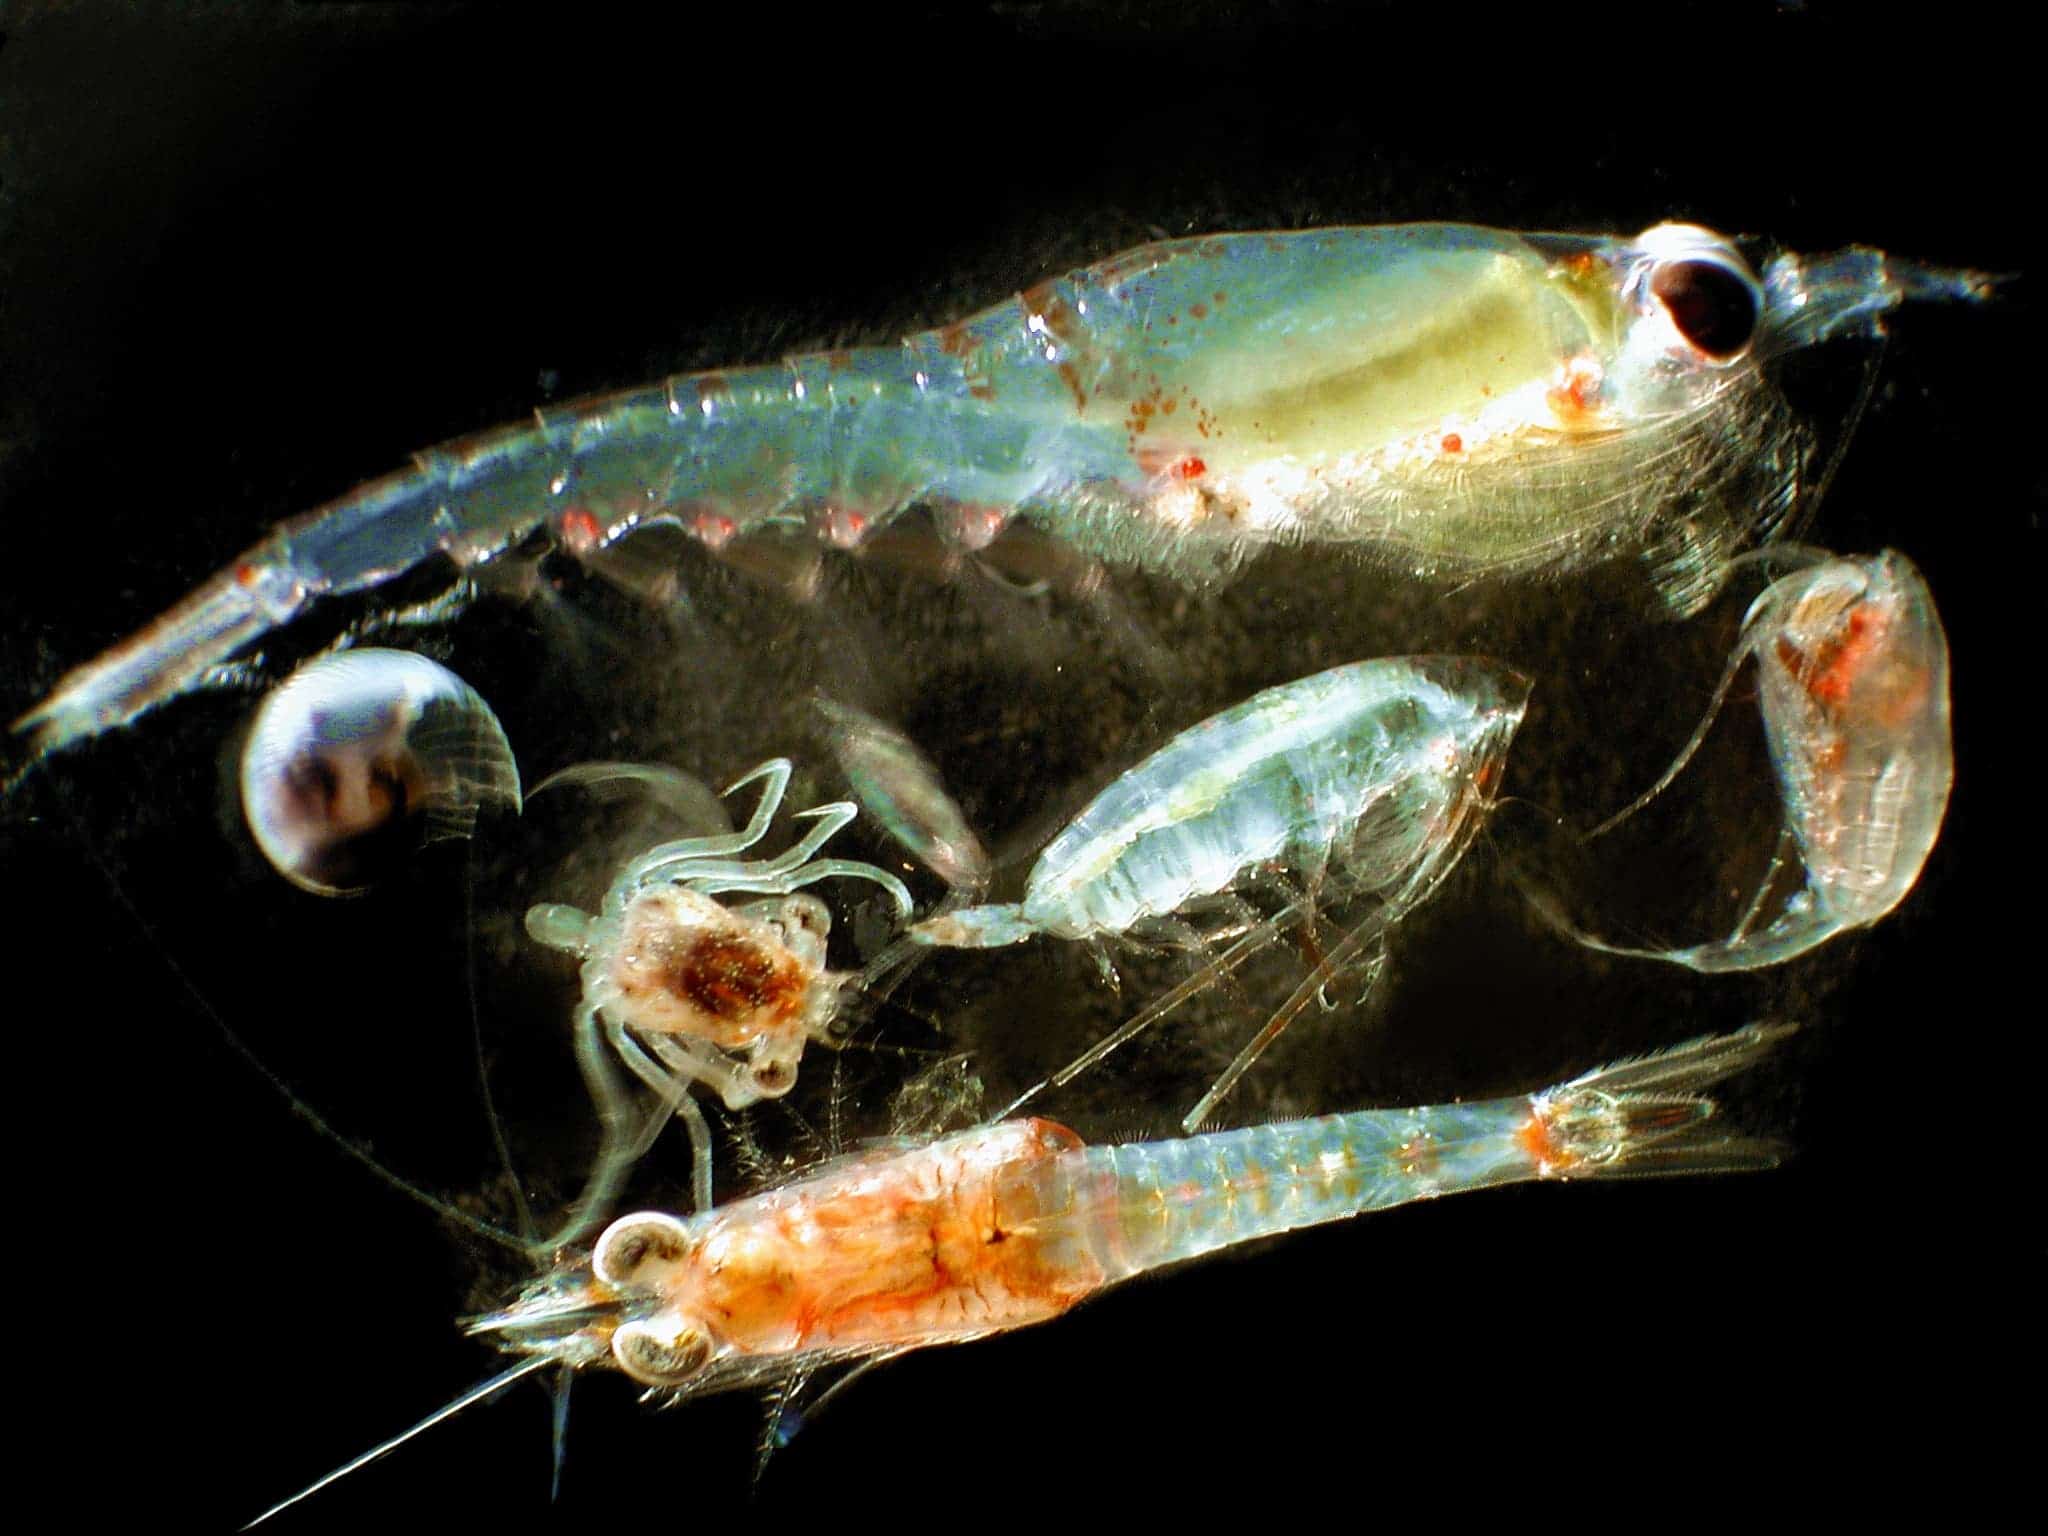 Zooplankton organisms
Source: Wikipedia